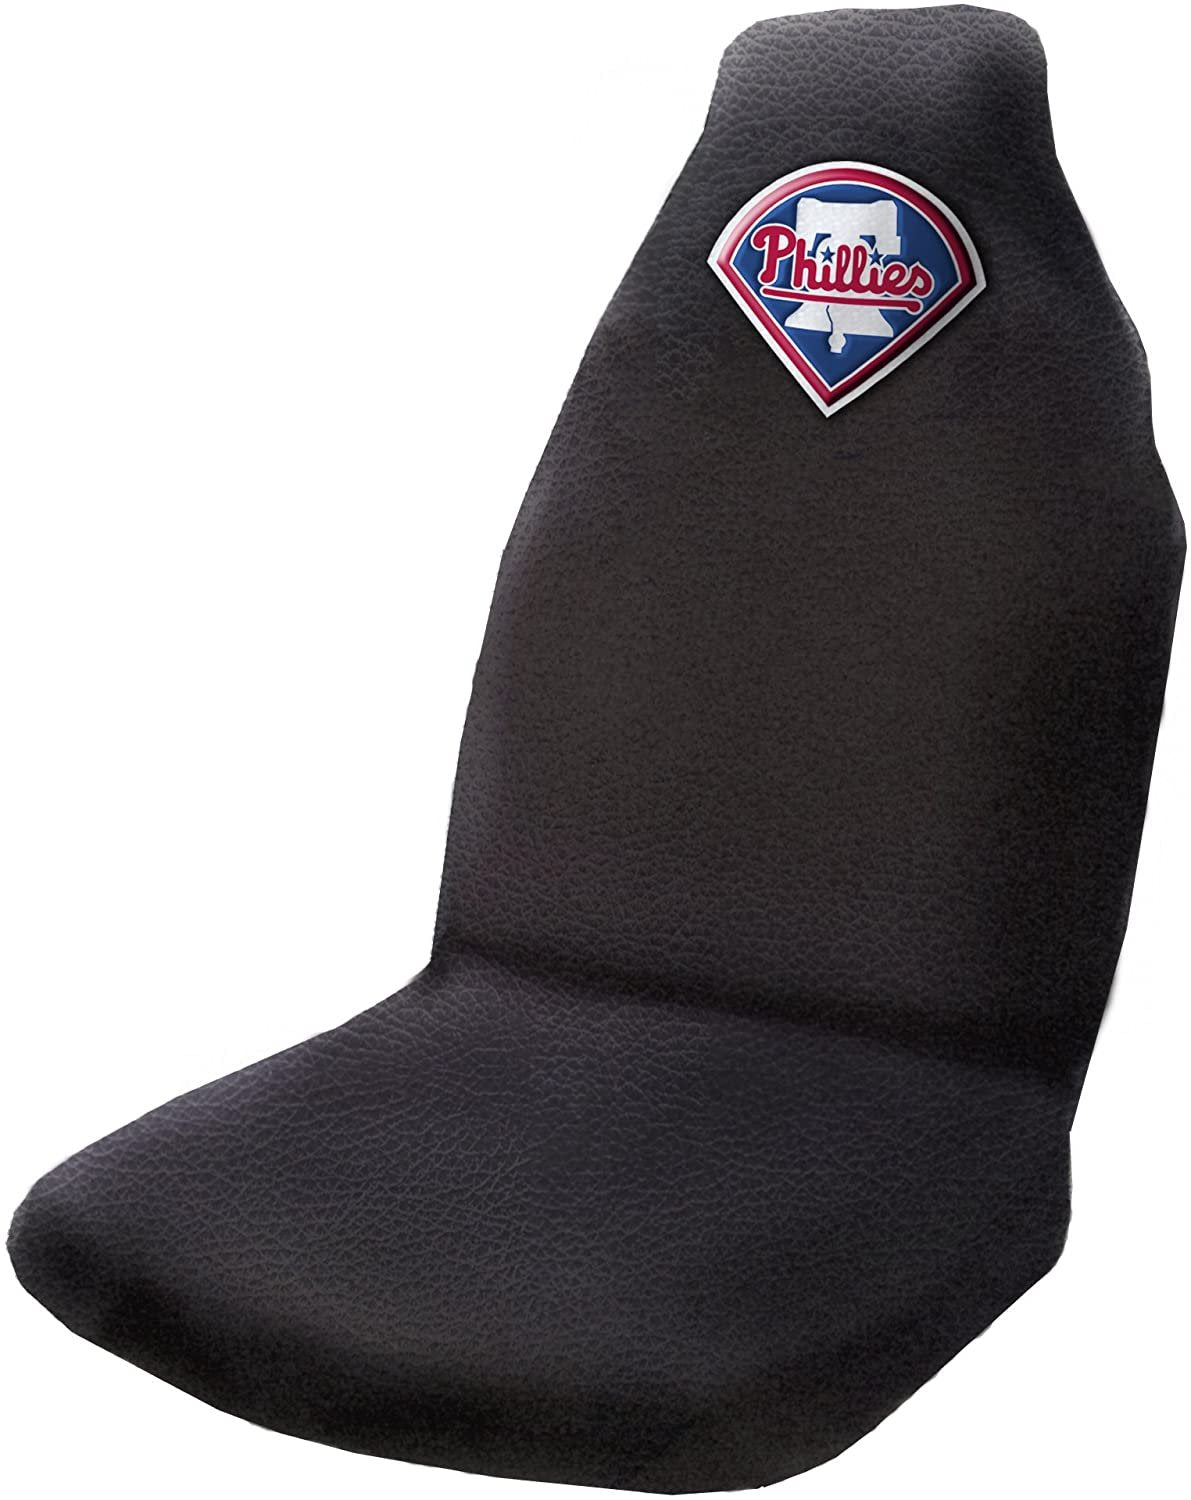 Phillies OFFICIAL Major League Baseball, Car Seat Cover